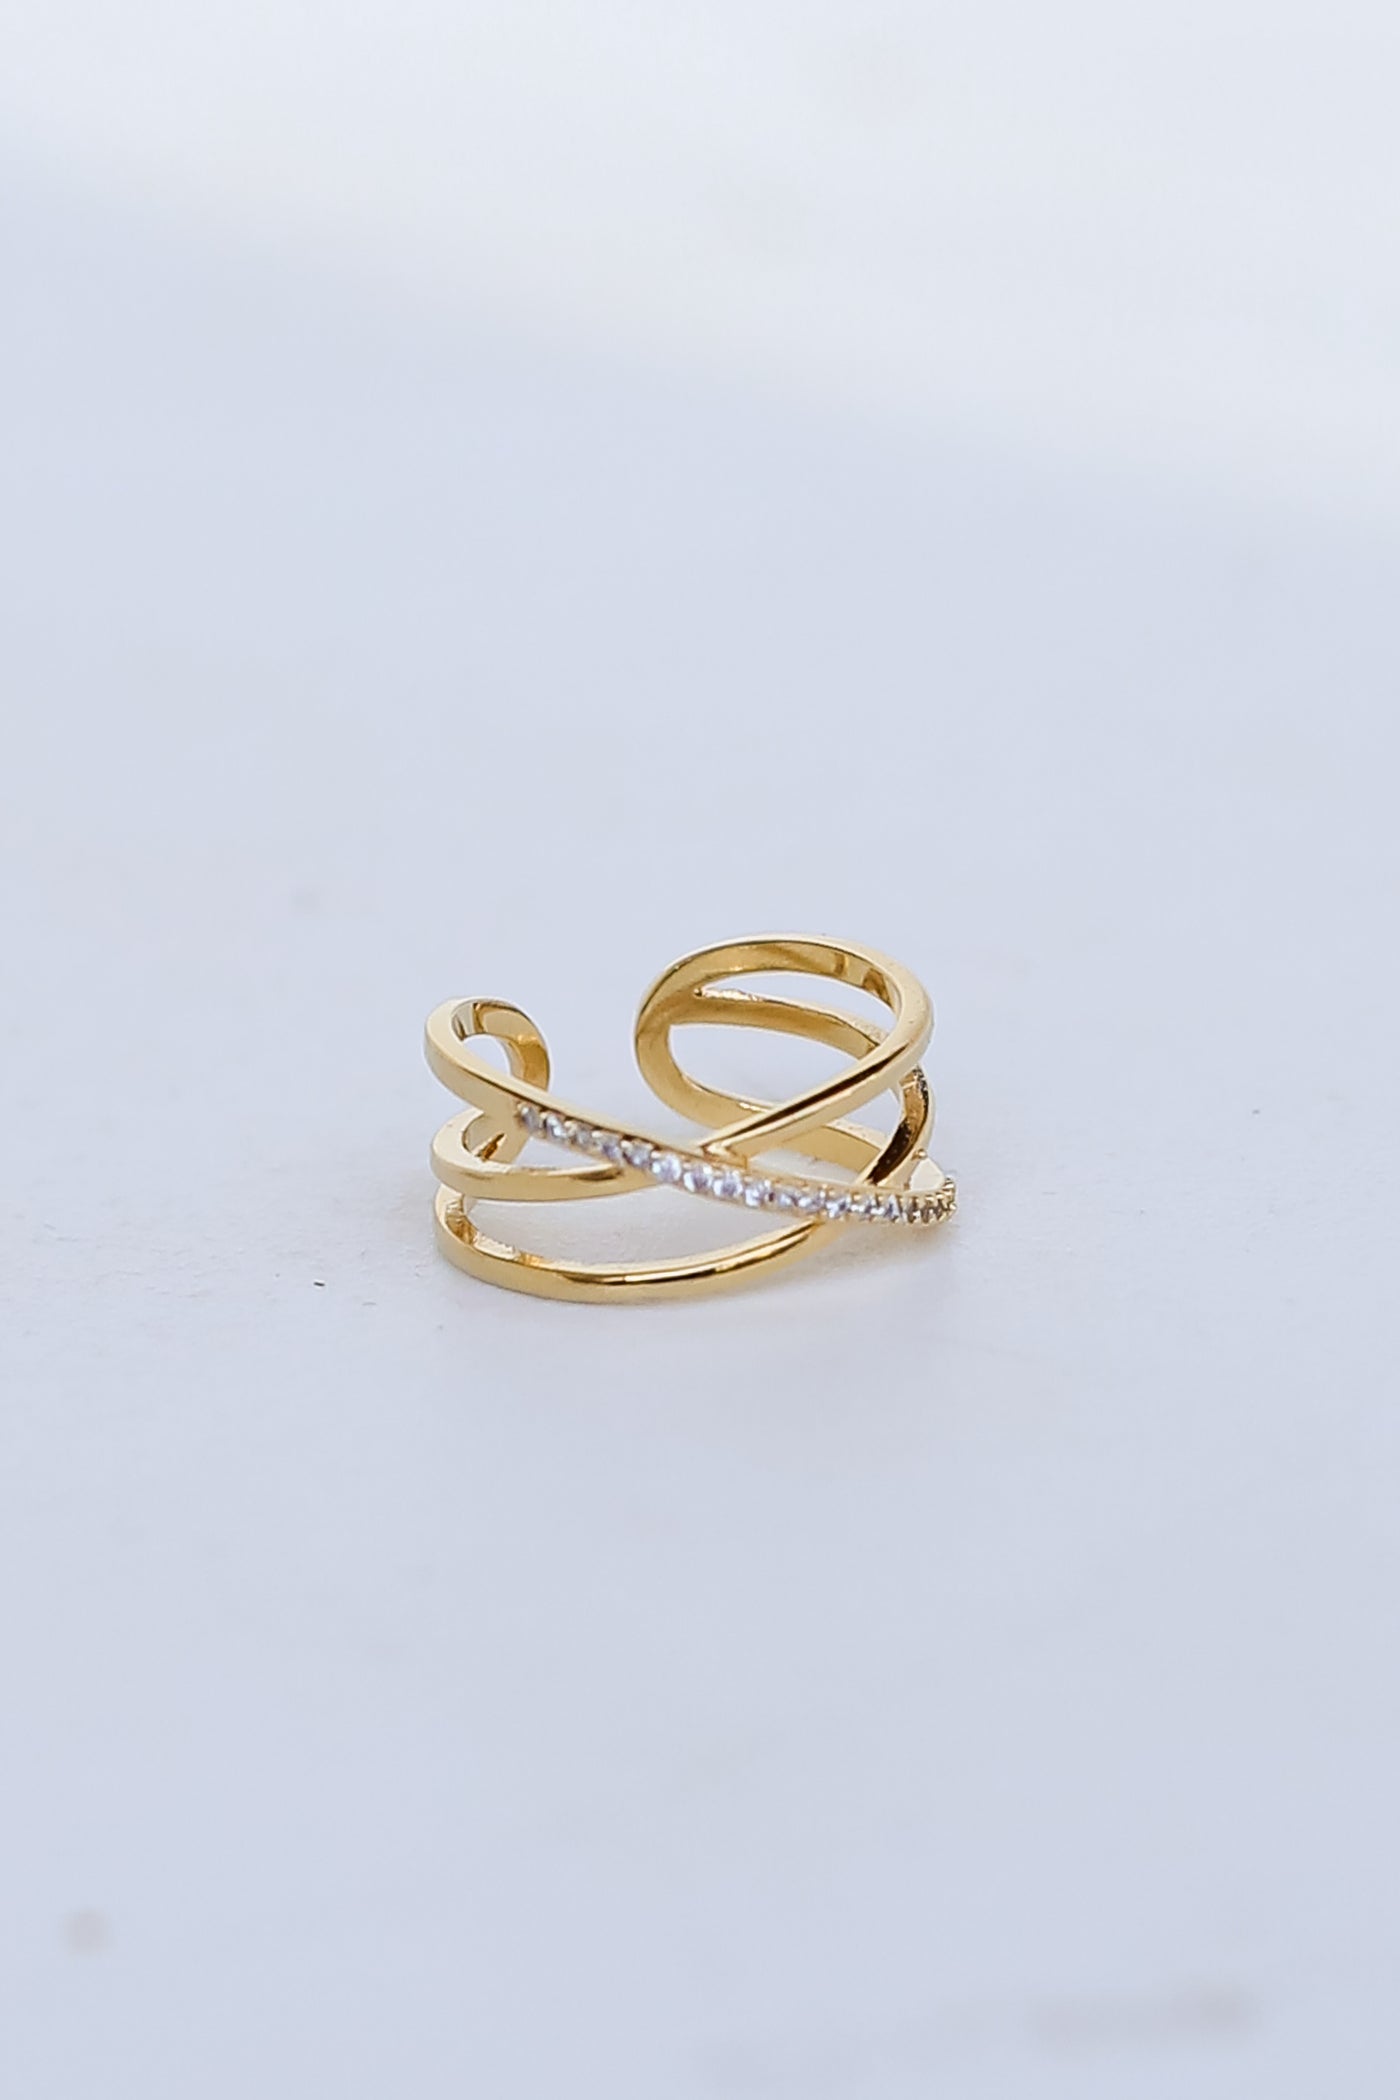 Gold Rhinestone Triple Ring close up